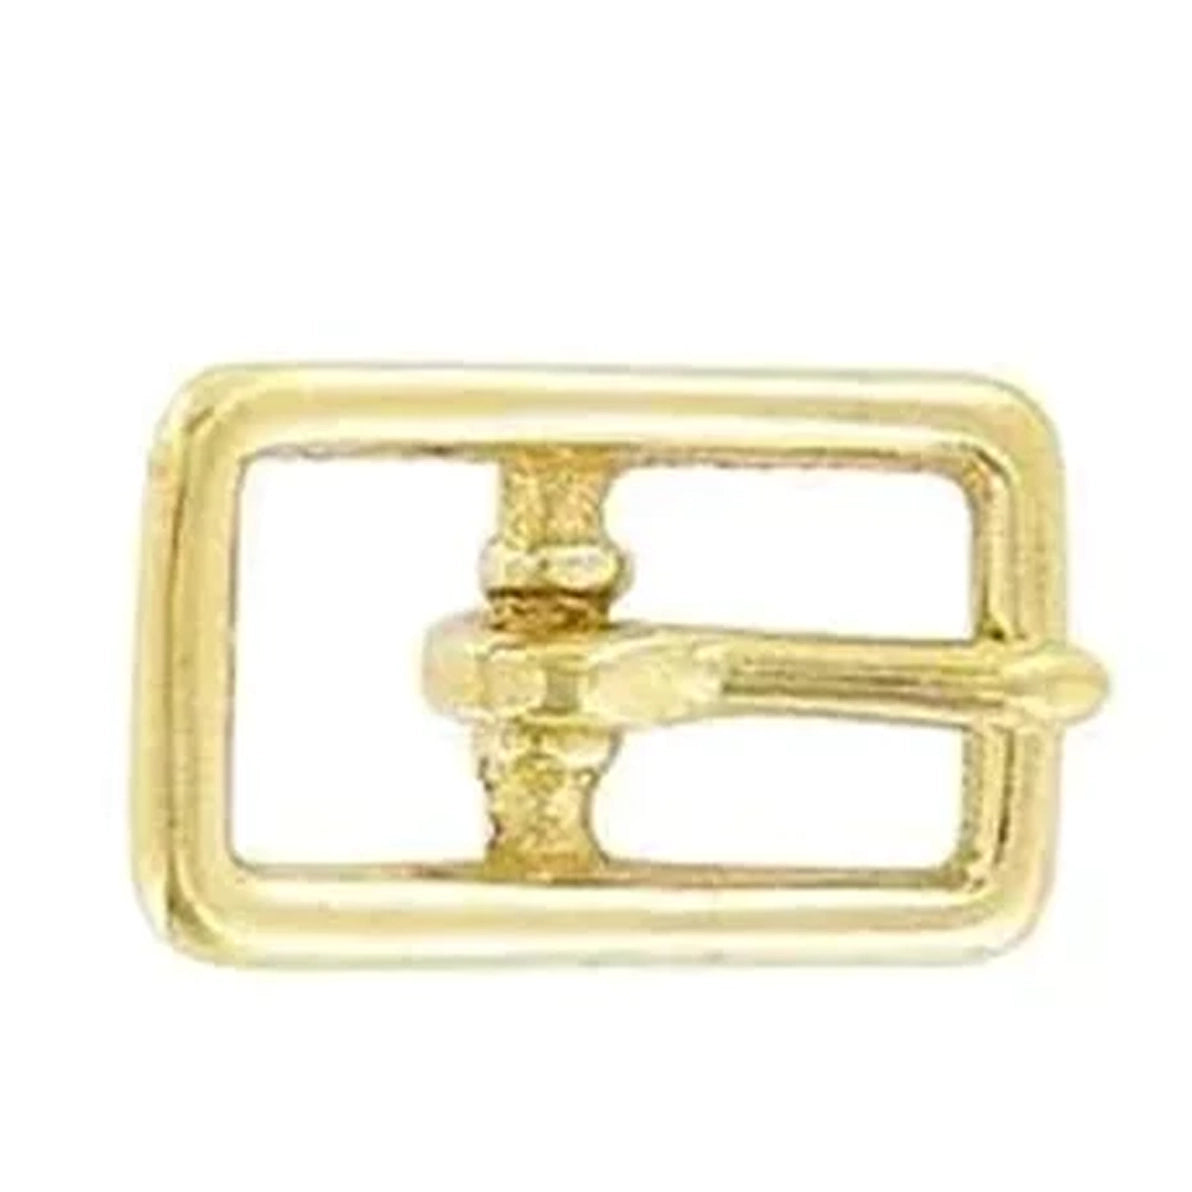 1/2" Brass, Center Bar Buckle, Solid Brass, #C-1401-SB